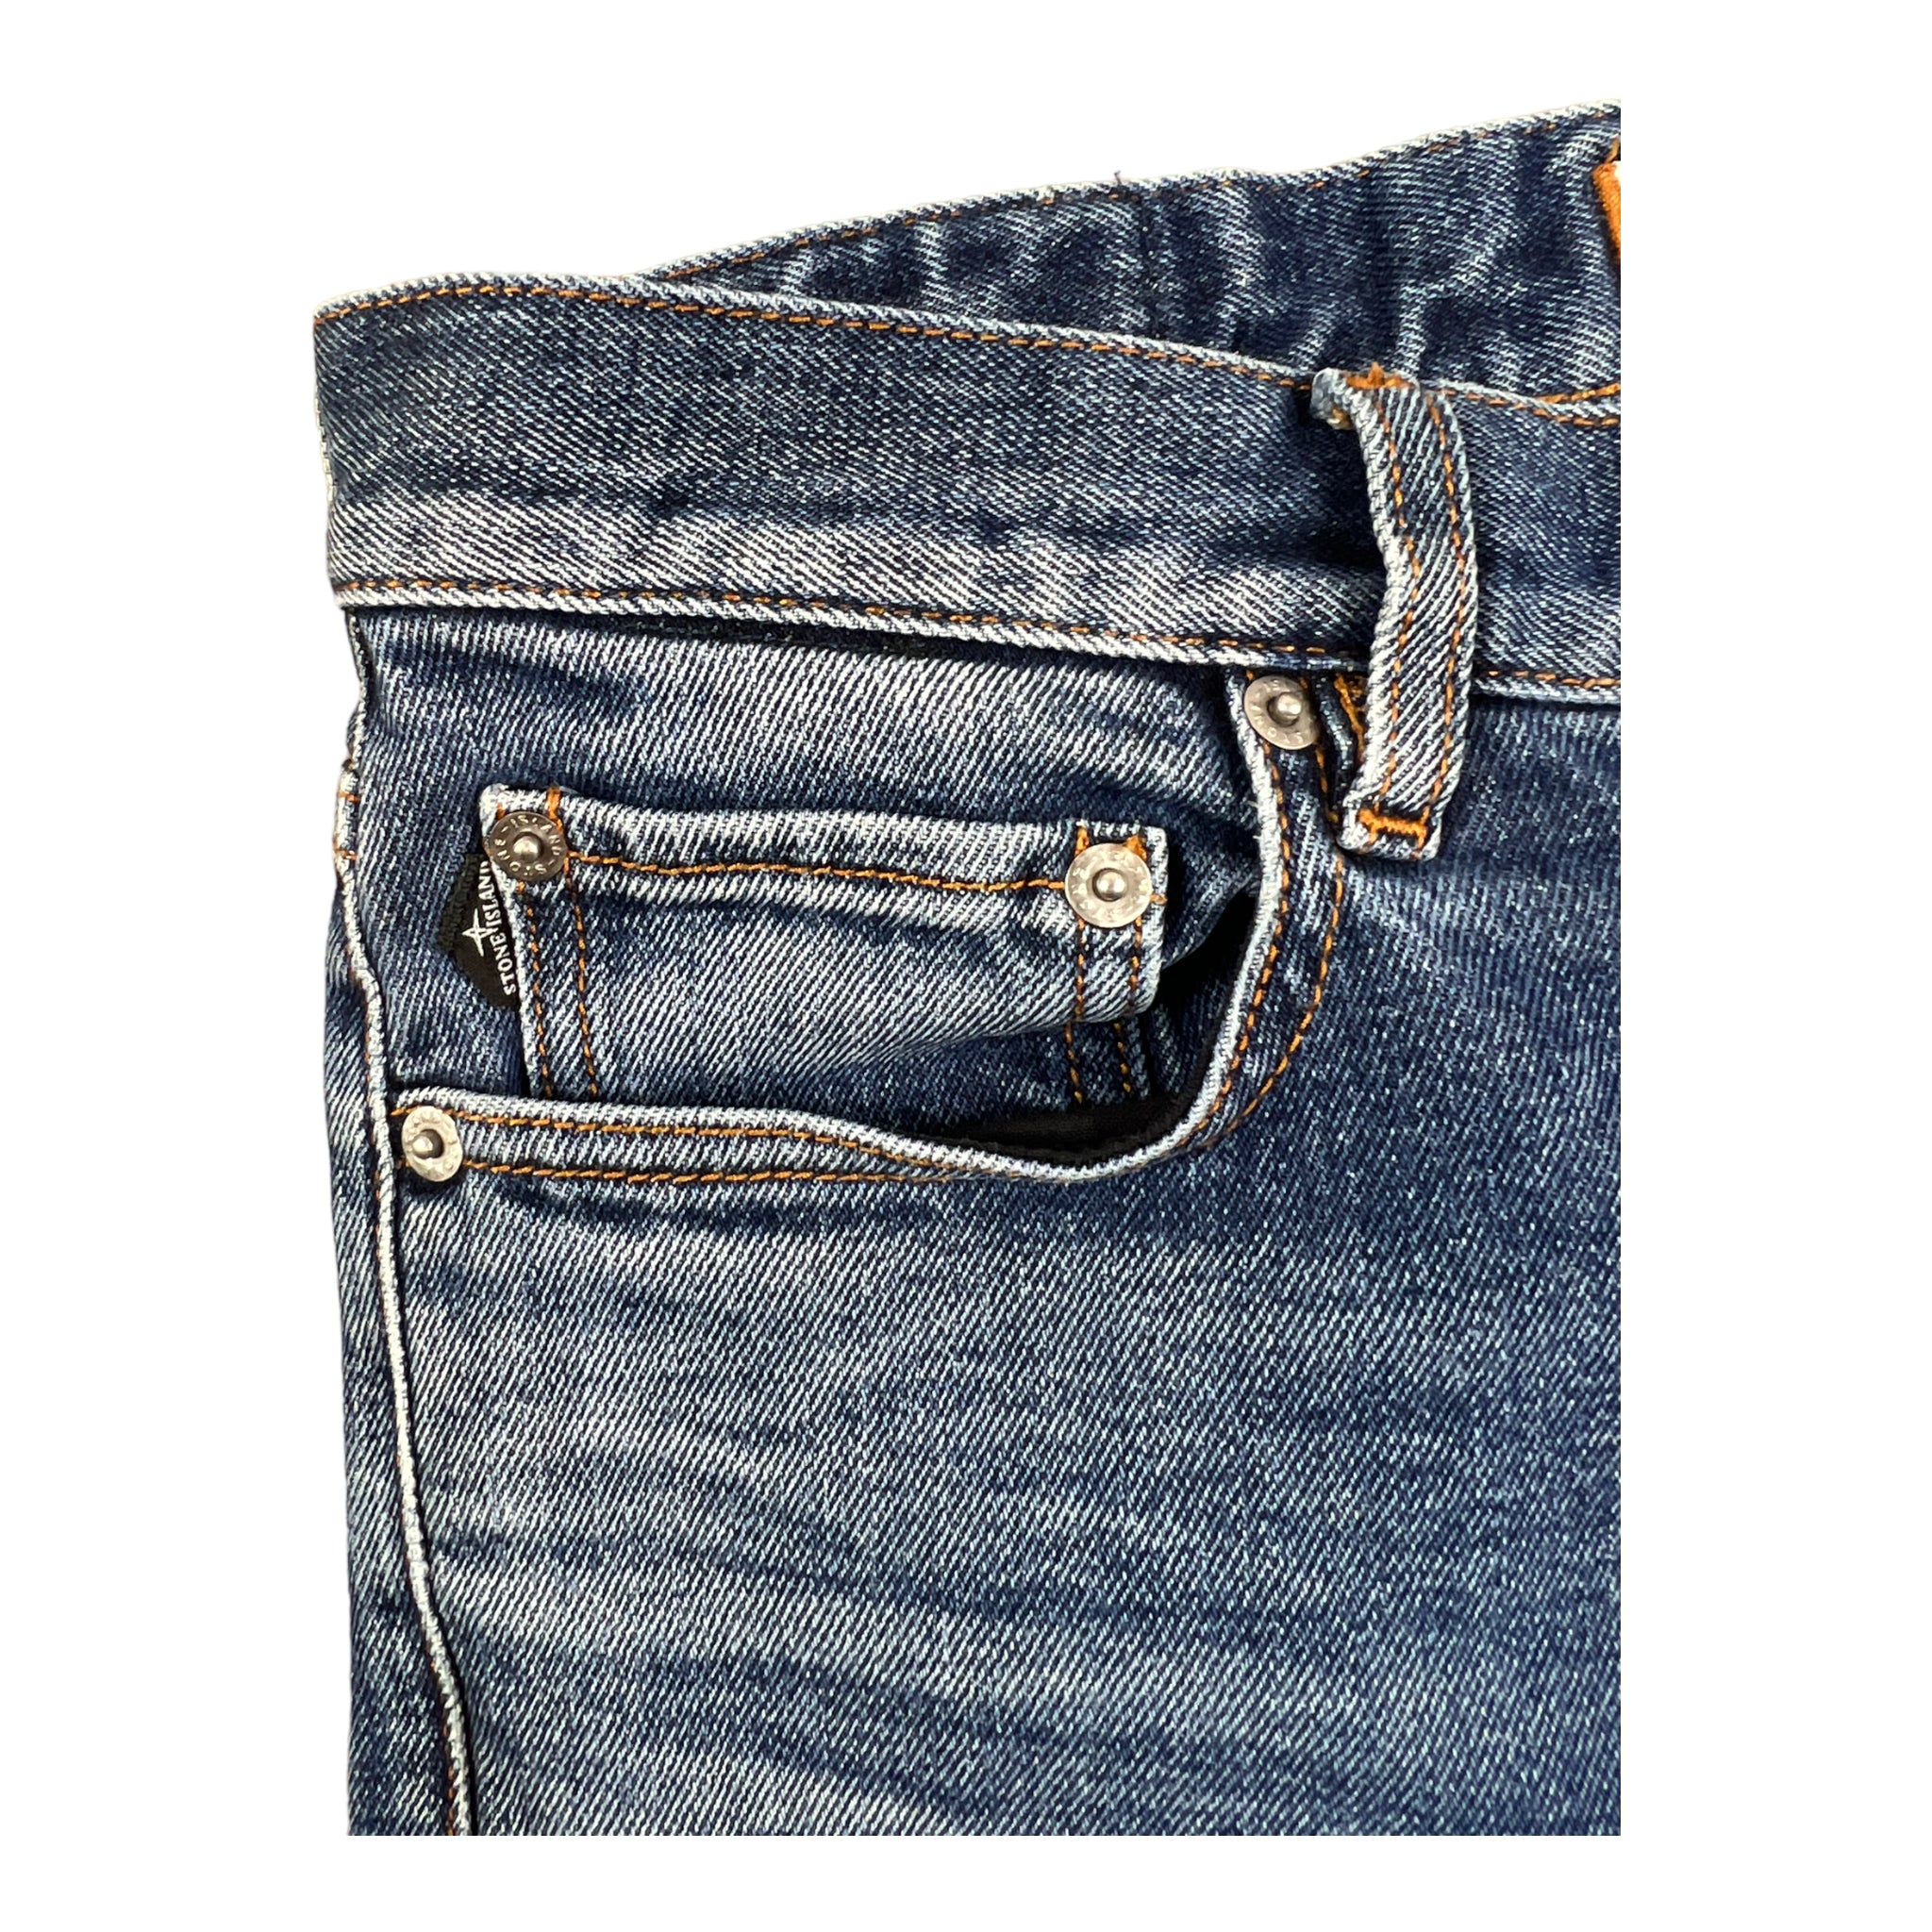 Vintage Stone Island Denim Jeans 👖 Authentic Stone... - Depop